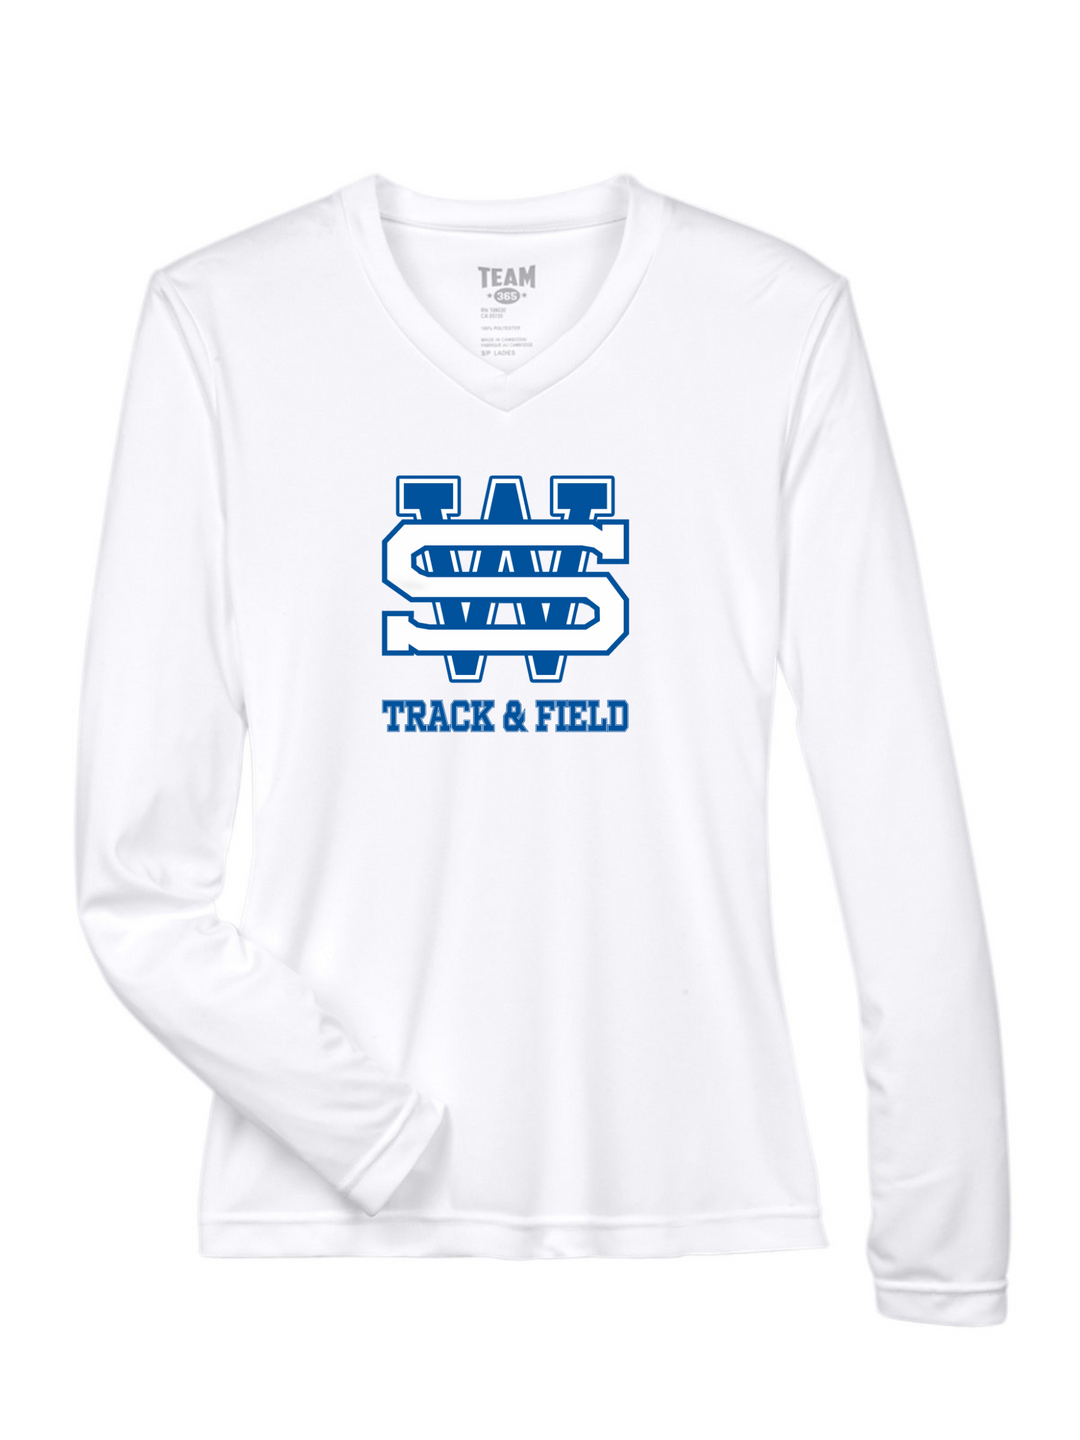 West Springfield Girl's Track & Field - Team 365 Women's Zone Performance Long Sleeve T-Shirt (TT11WL)